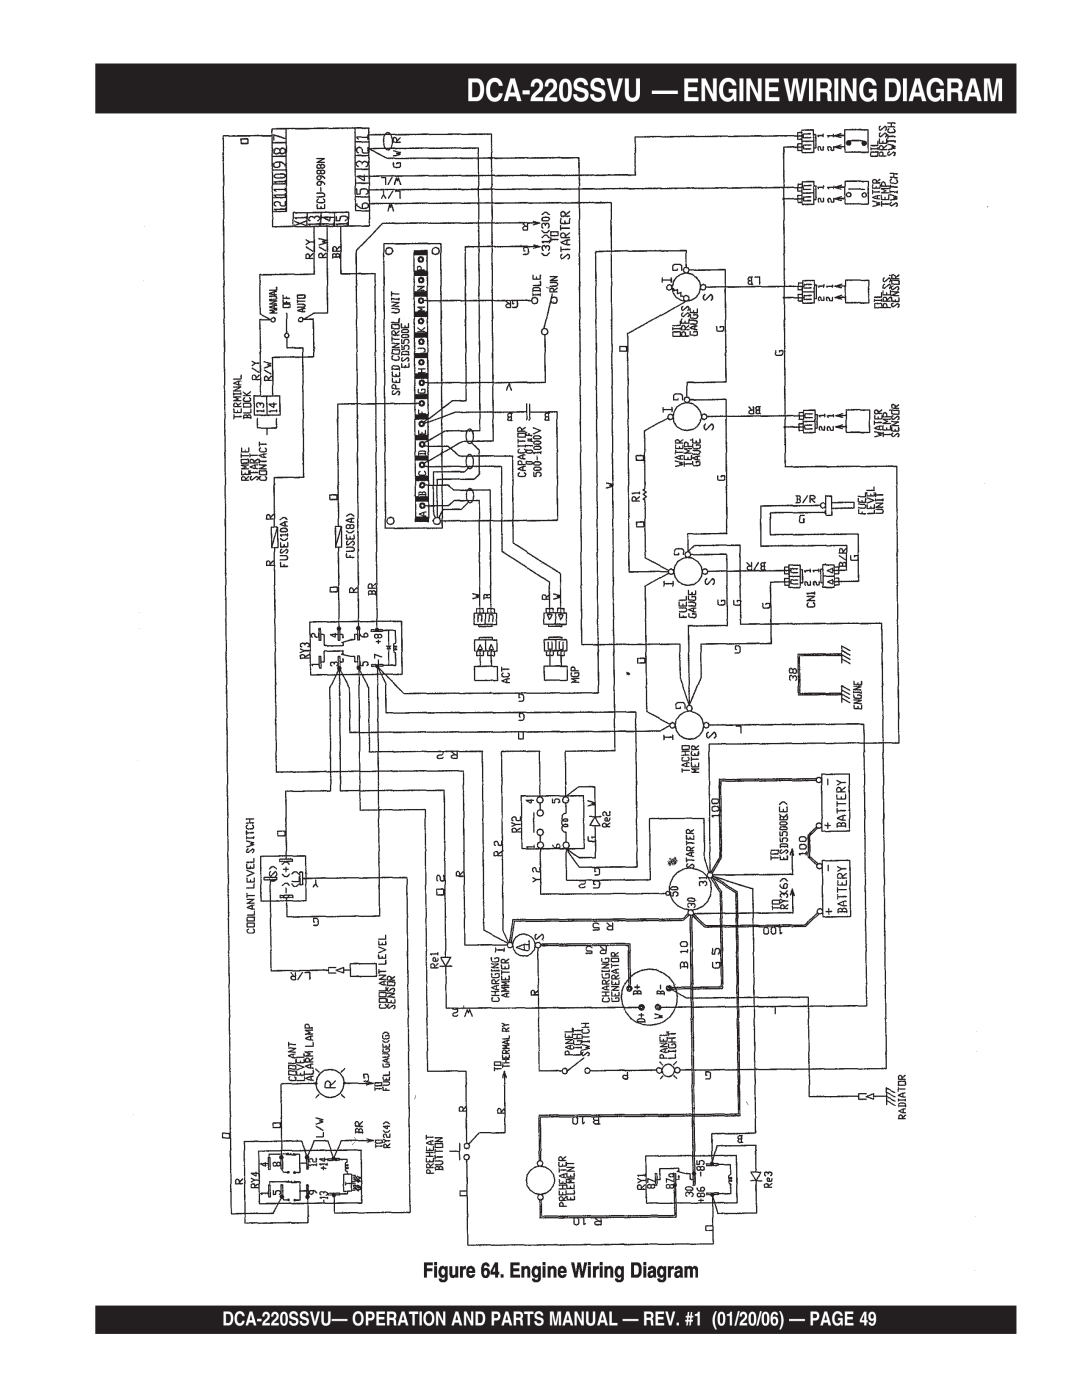 Multiquip operation manual DCA-220SSVU— ENGINEWIRING DIAGRAM, Engine Wiring Diagram 